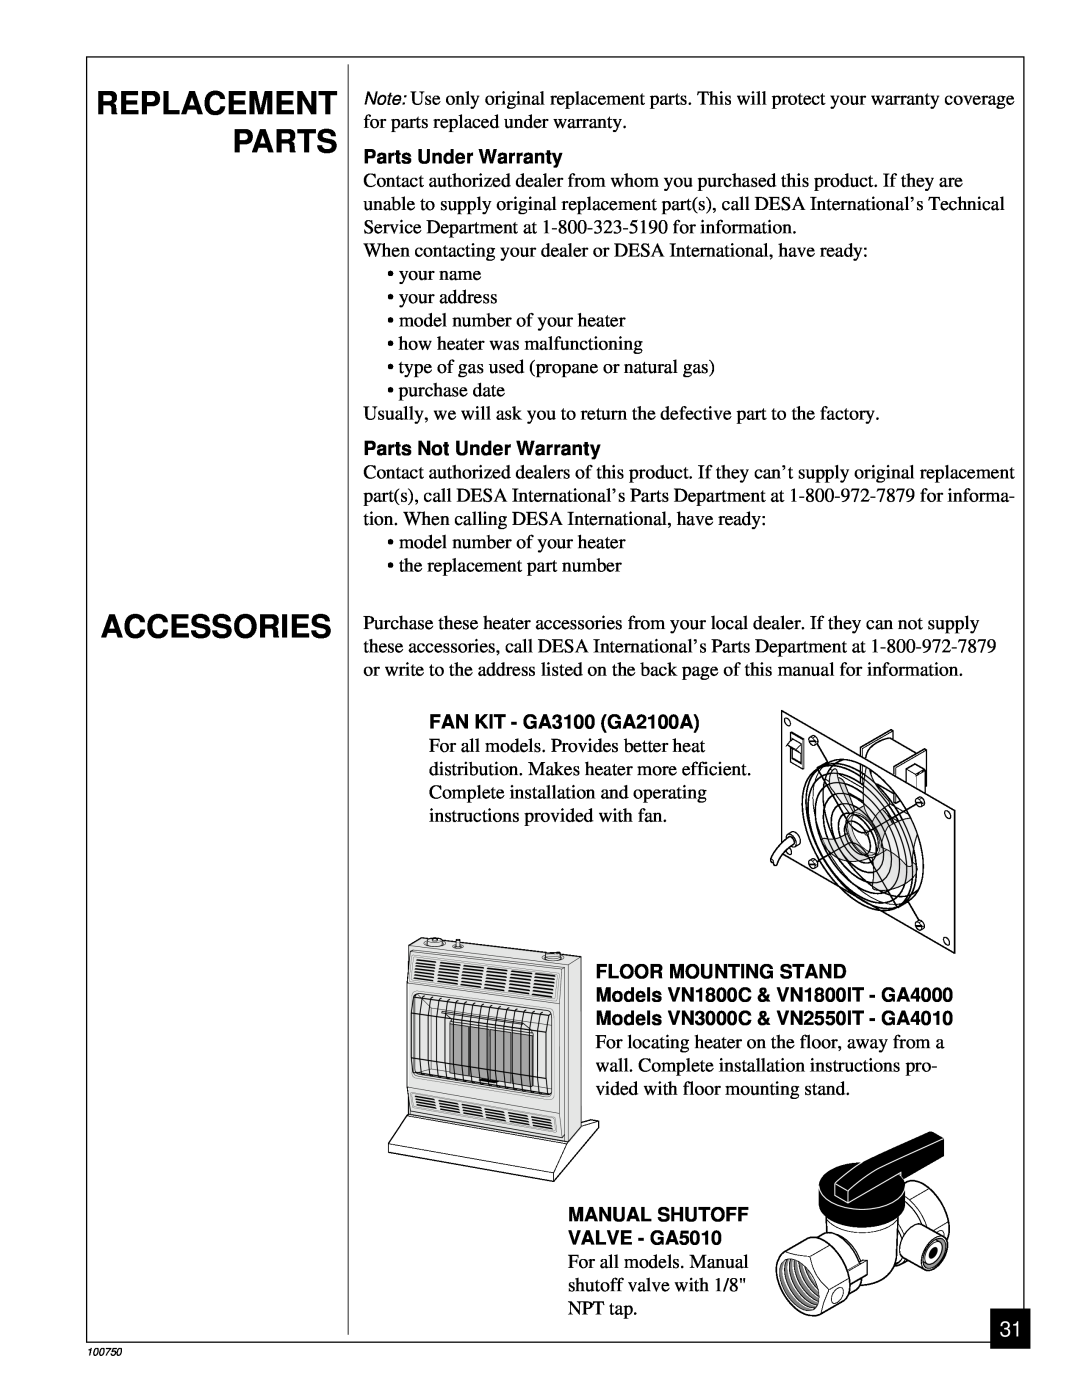 Desa VN3000C Replacement, Accessories, Parts Under Warranty, Parts Not Under Warranty, FAN KIT - GA3100 GA2100A 